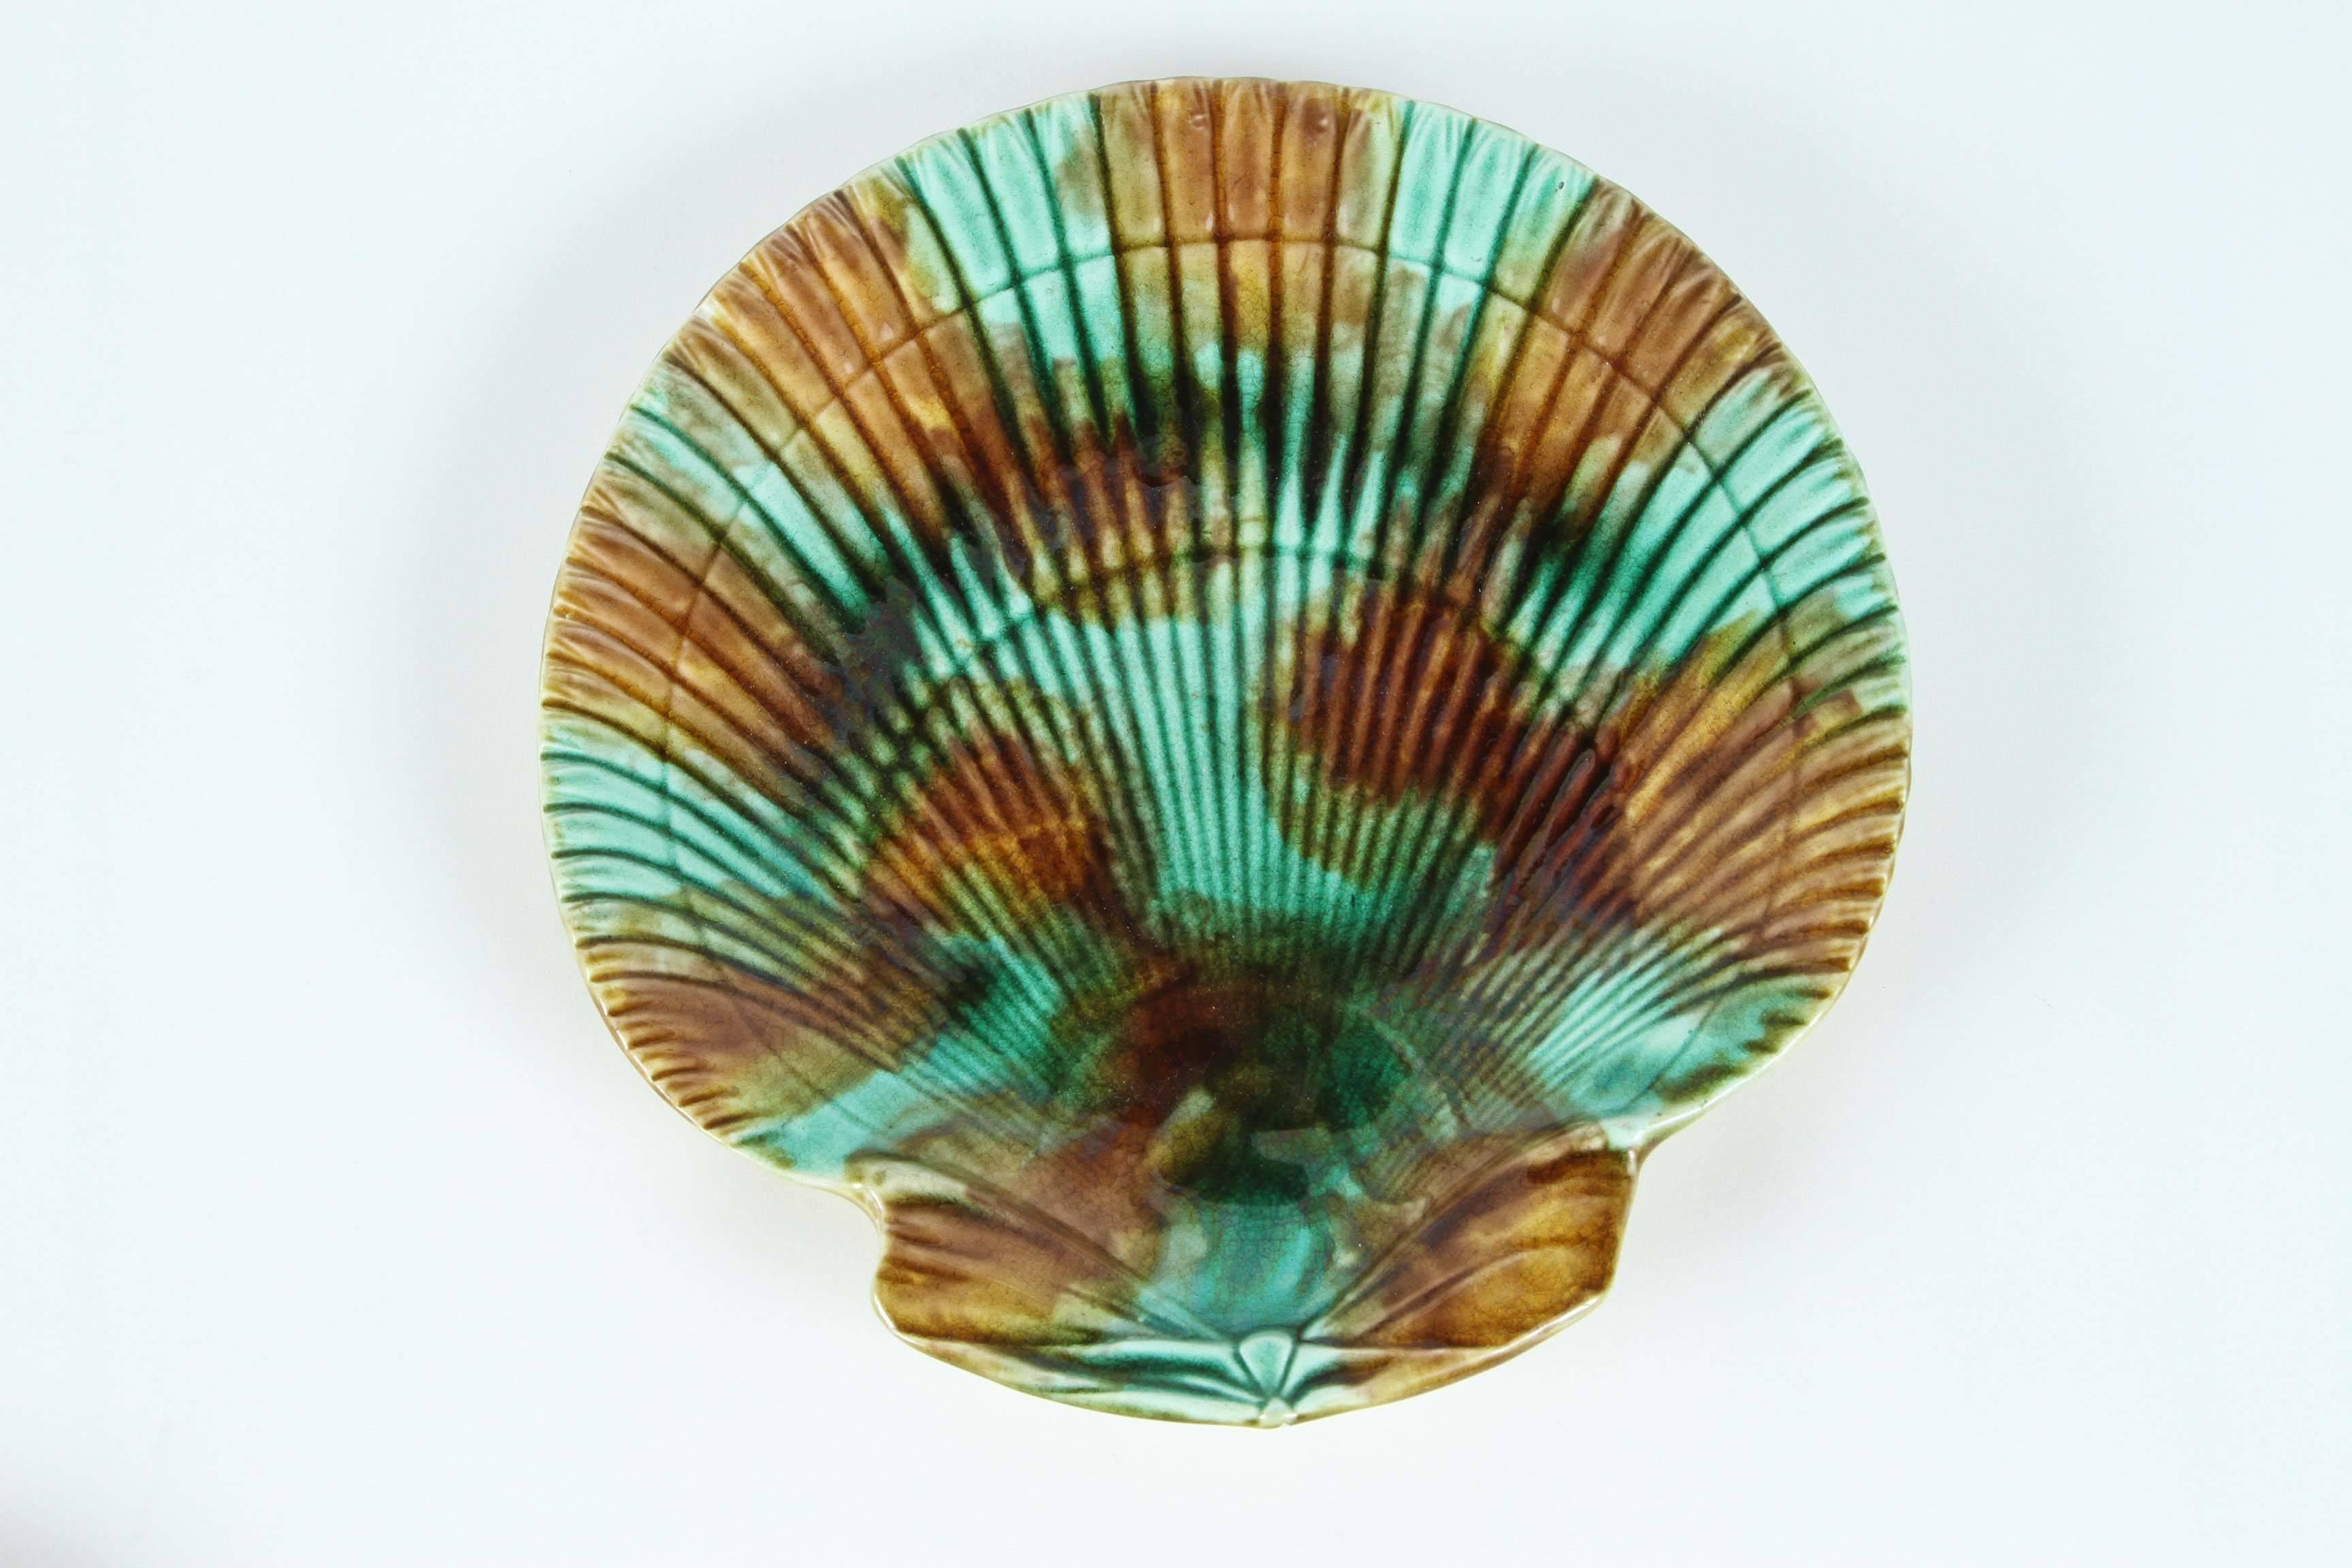 Glazed Pair of Wedgwood Shell Plates with Mottled Majolica Glaze, 19th Century